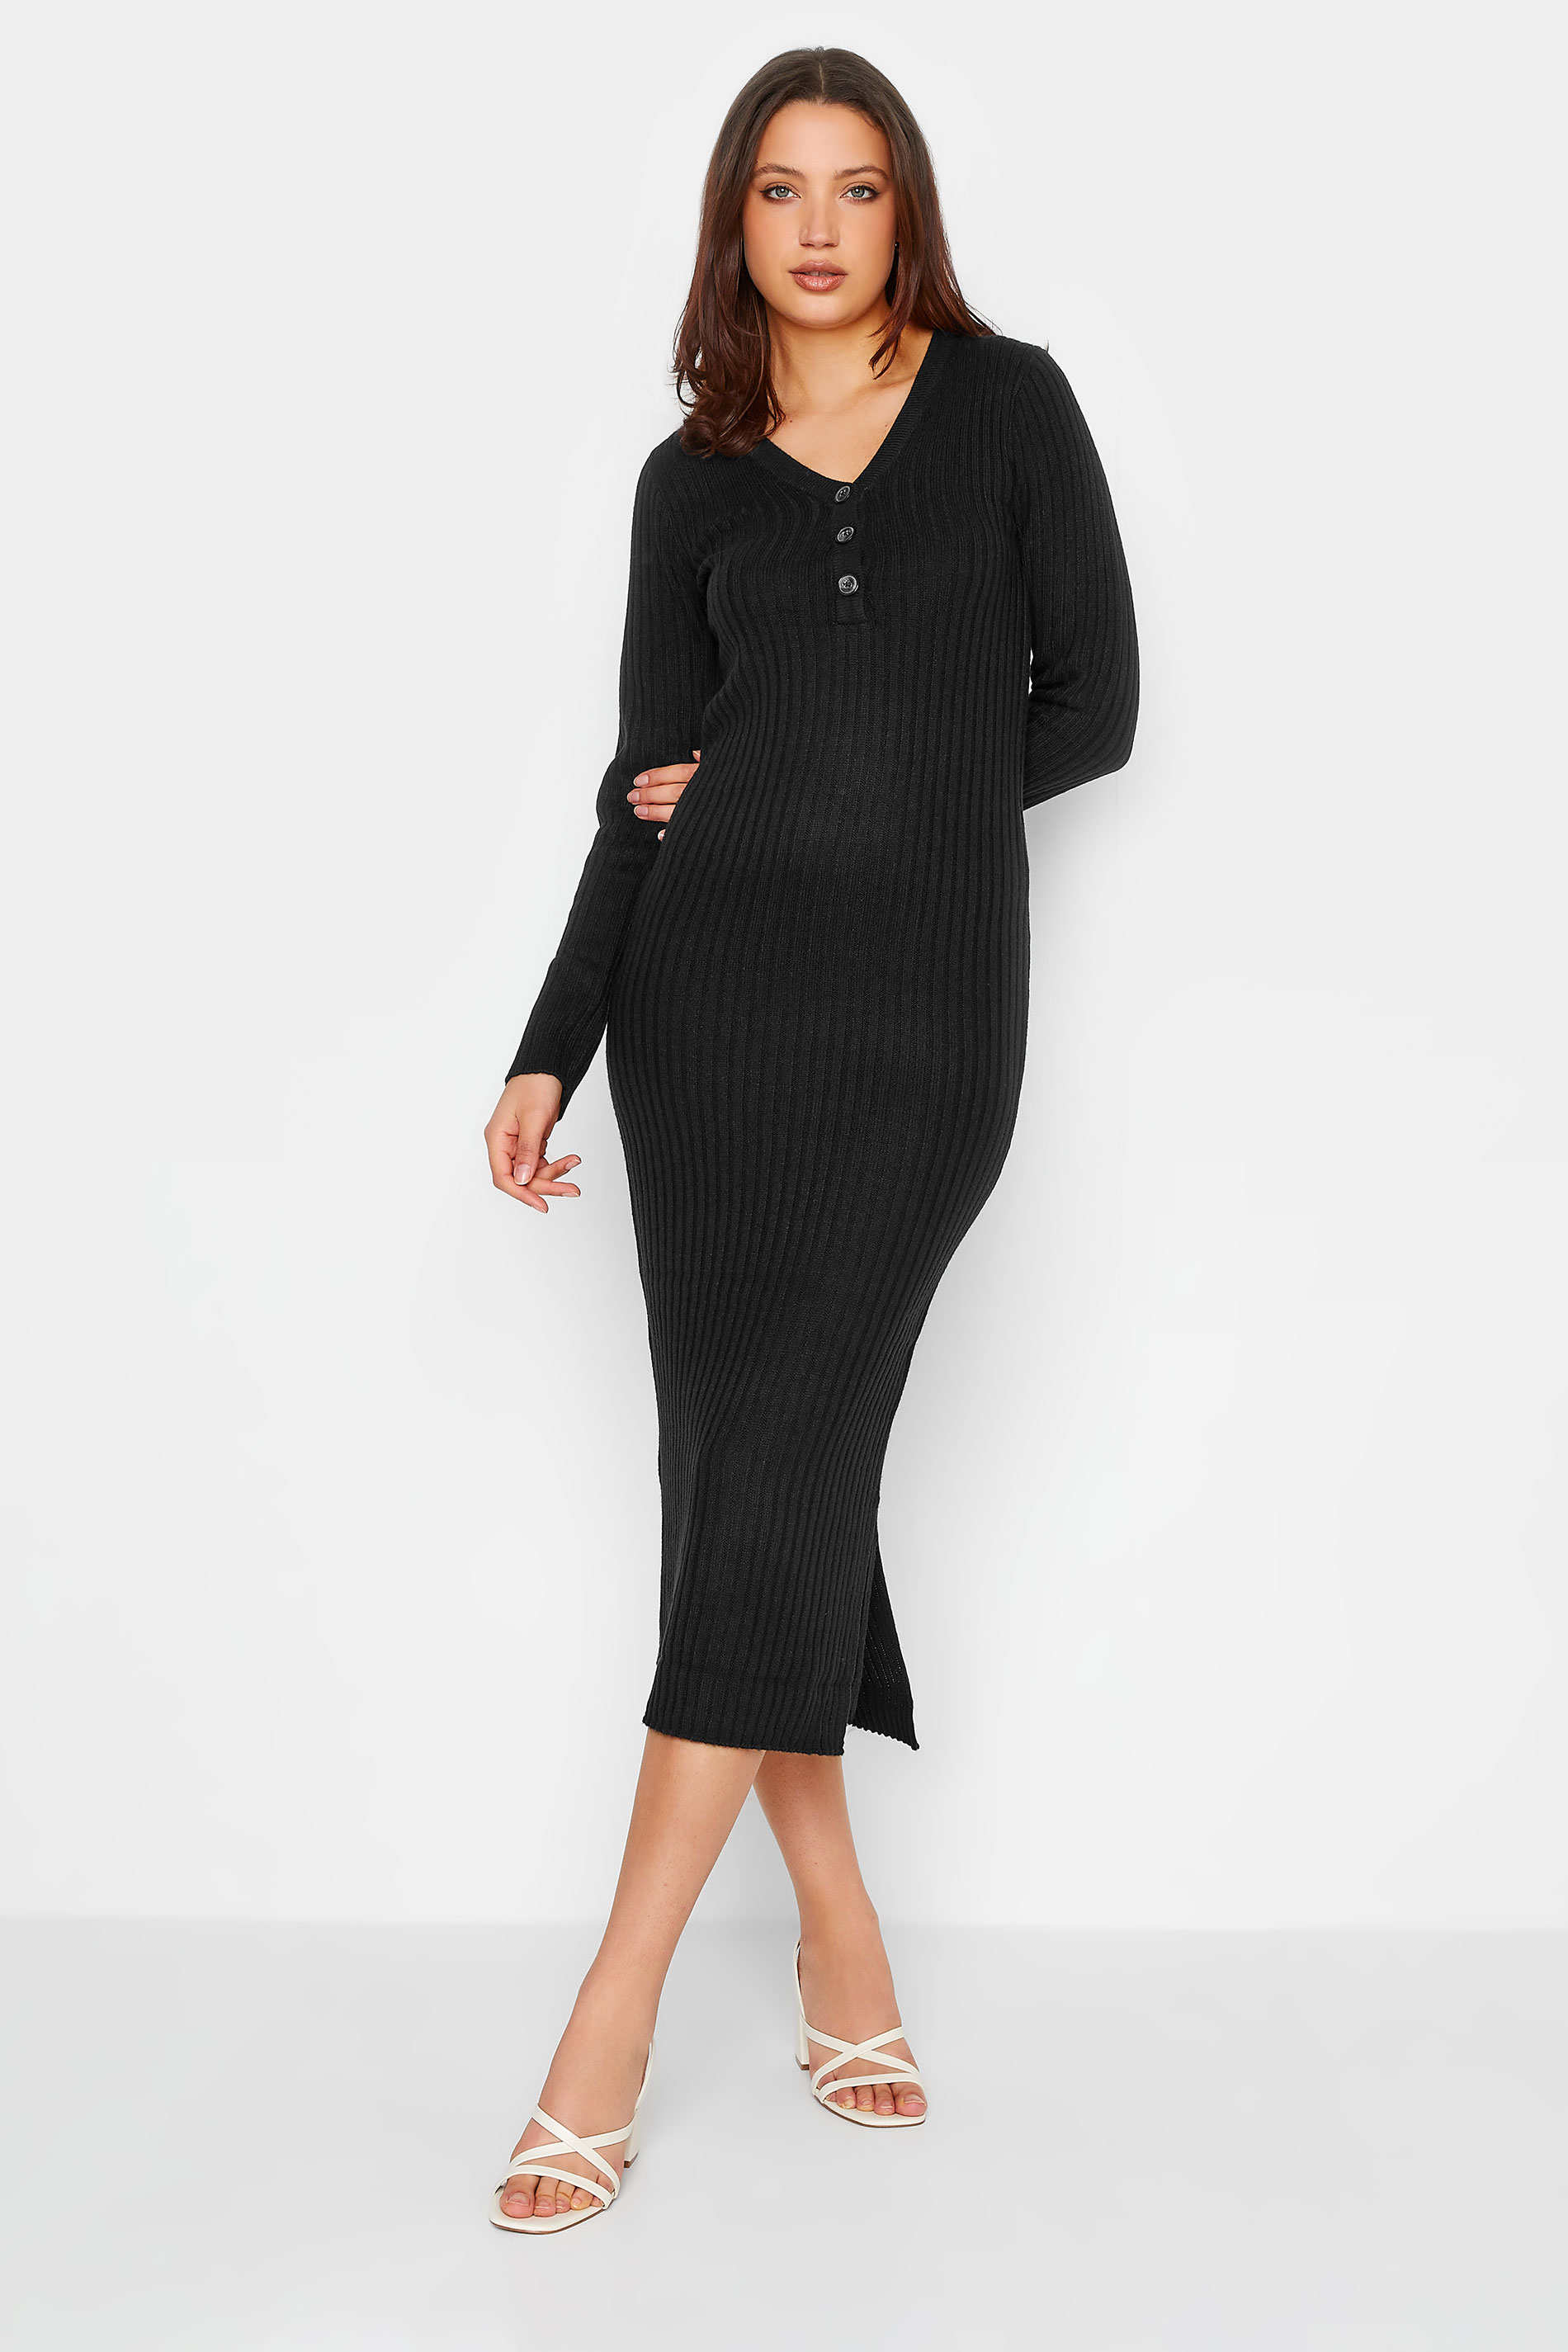 Tall Women's Black Ribbed Long Sleeve Midi Dress | Long Tall Sally  1